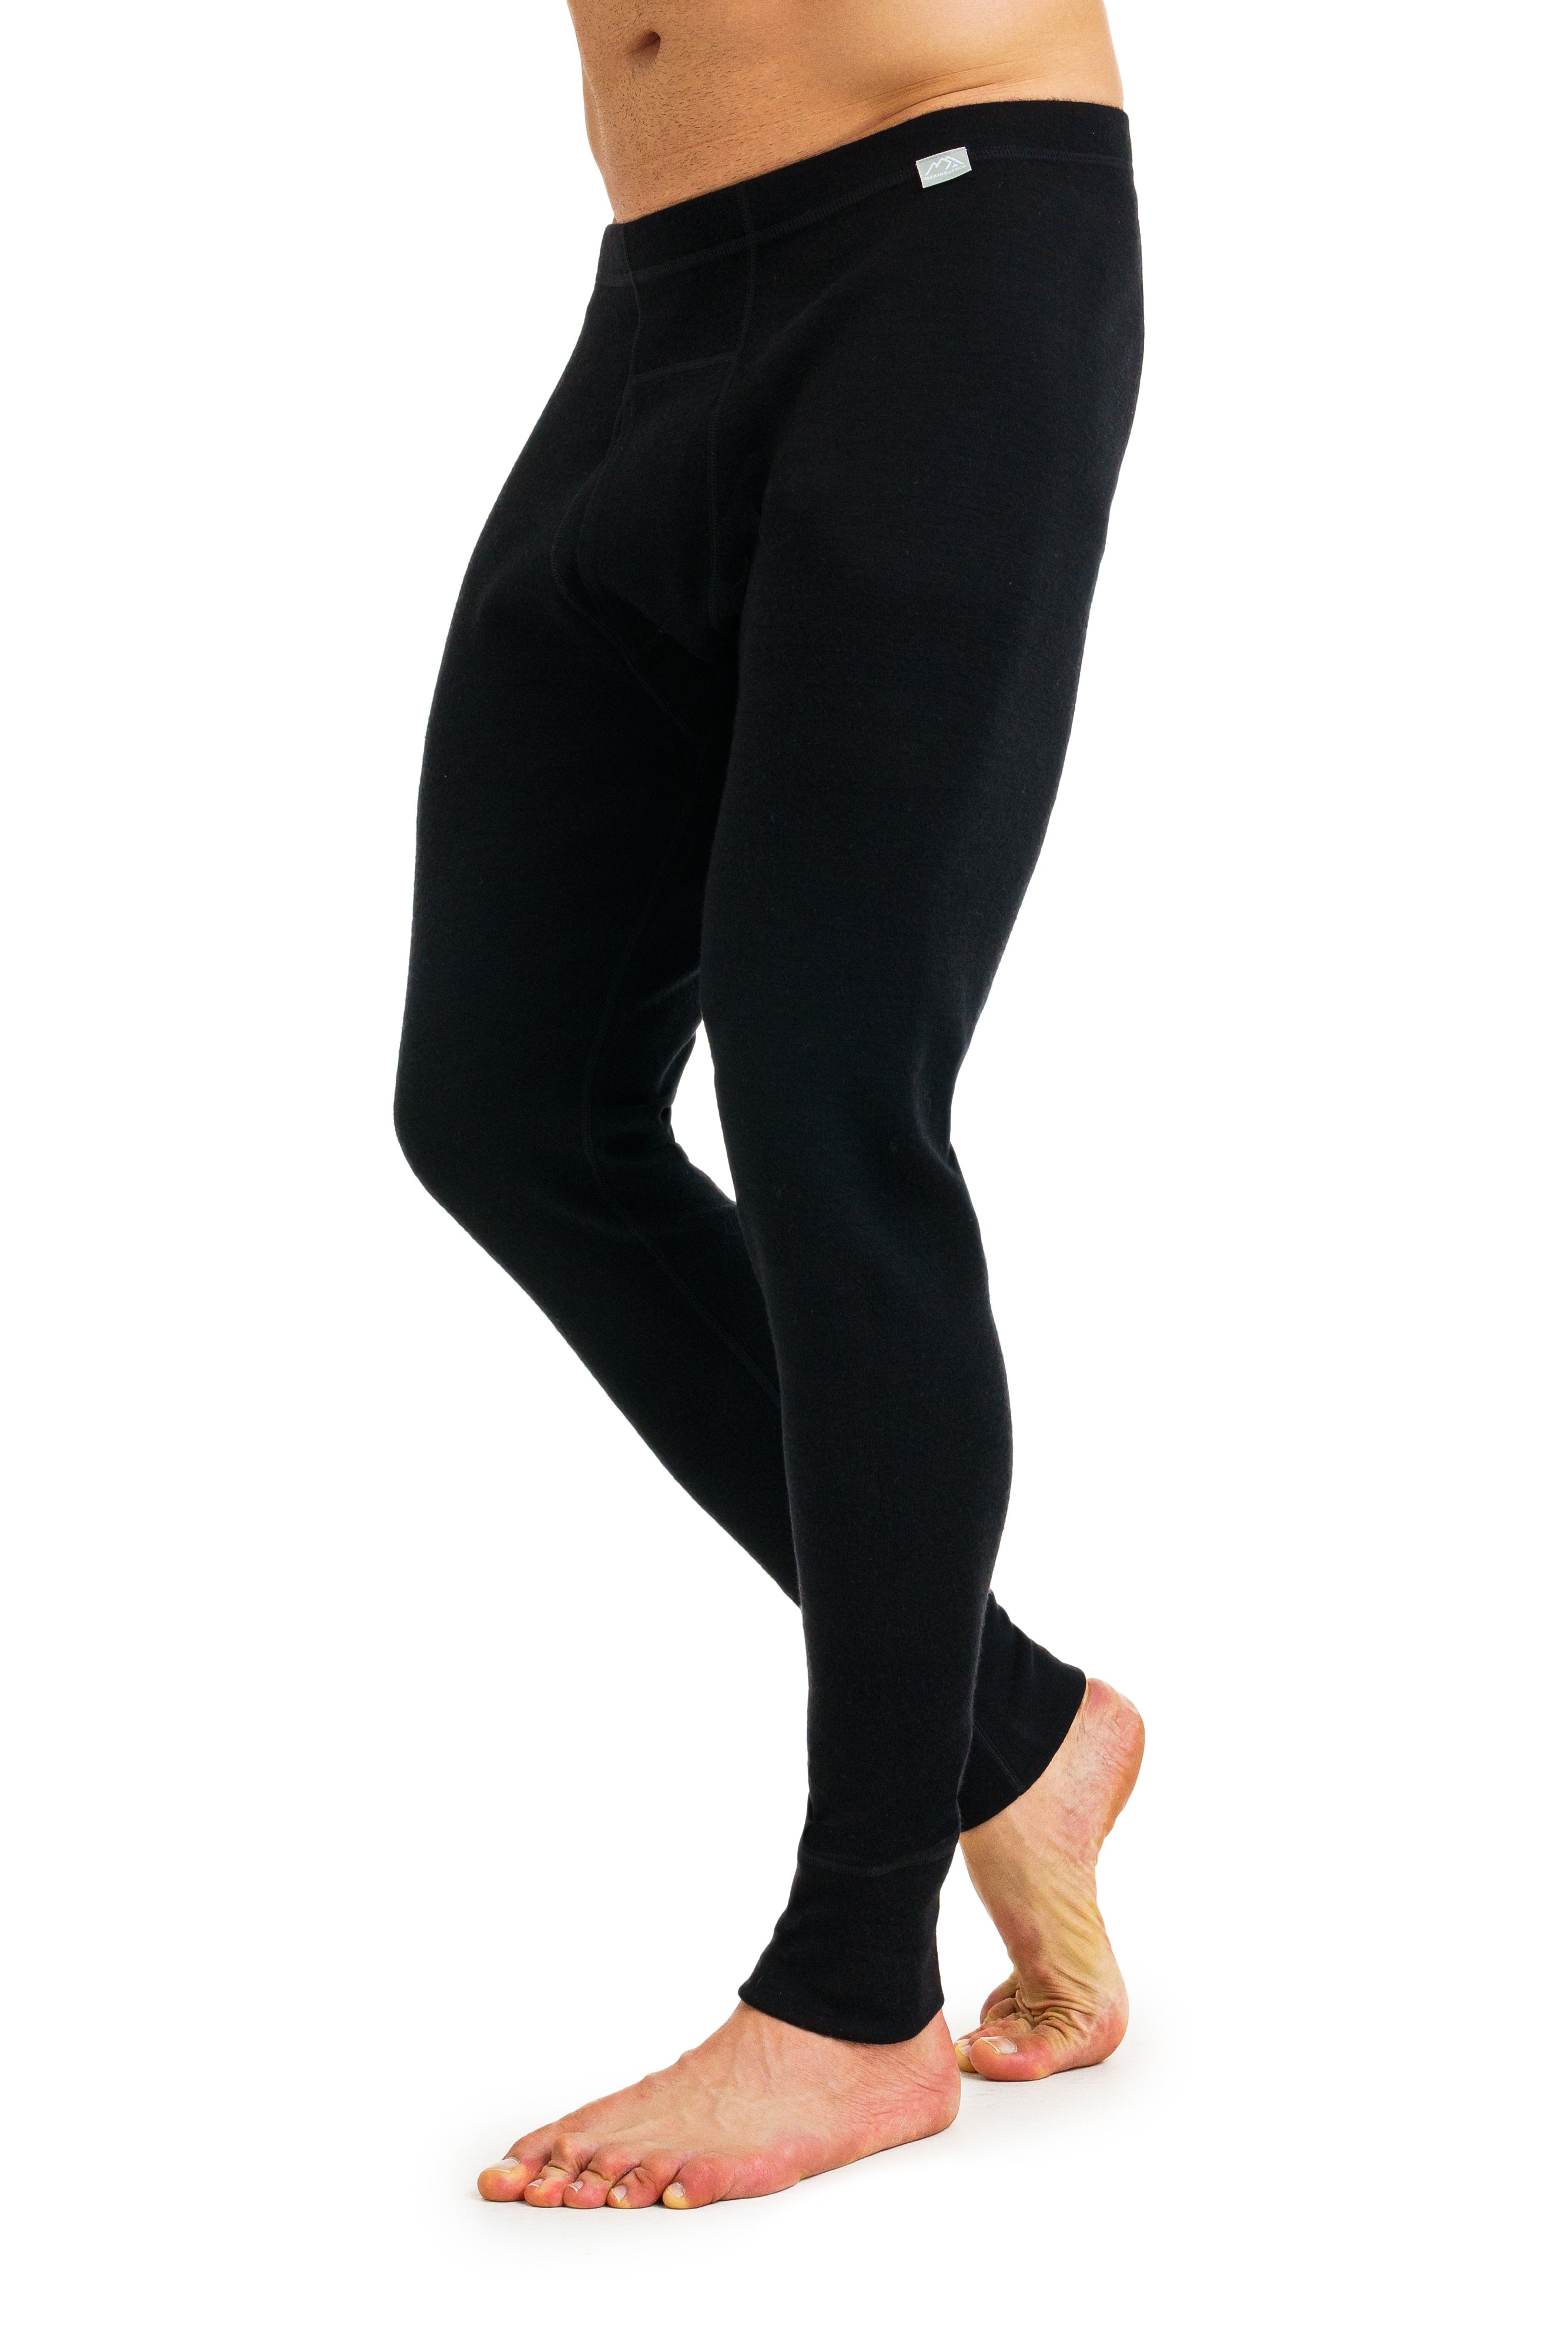 Merino Wool Pants - Heavyweight Base Layer Black | Bottom | Underwear |  Thermal 